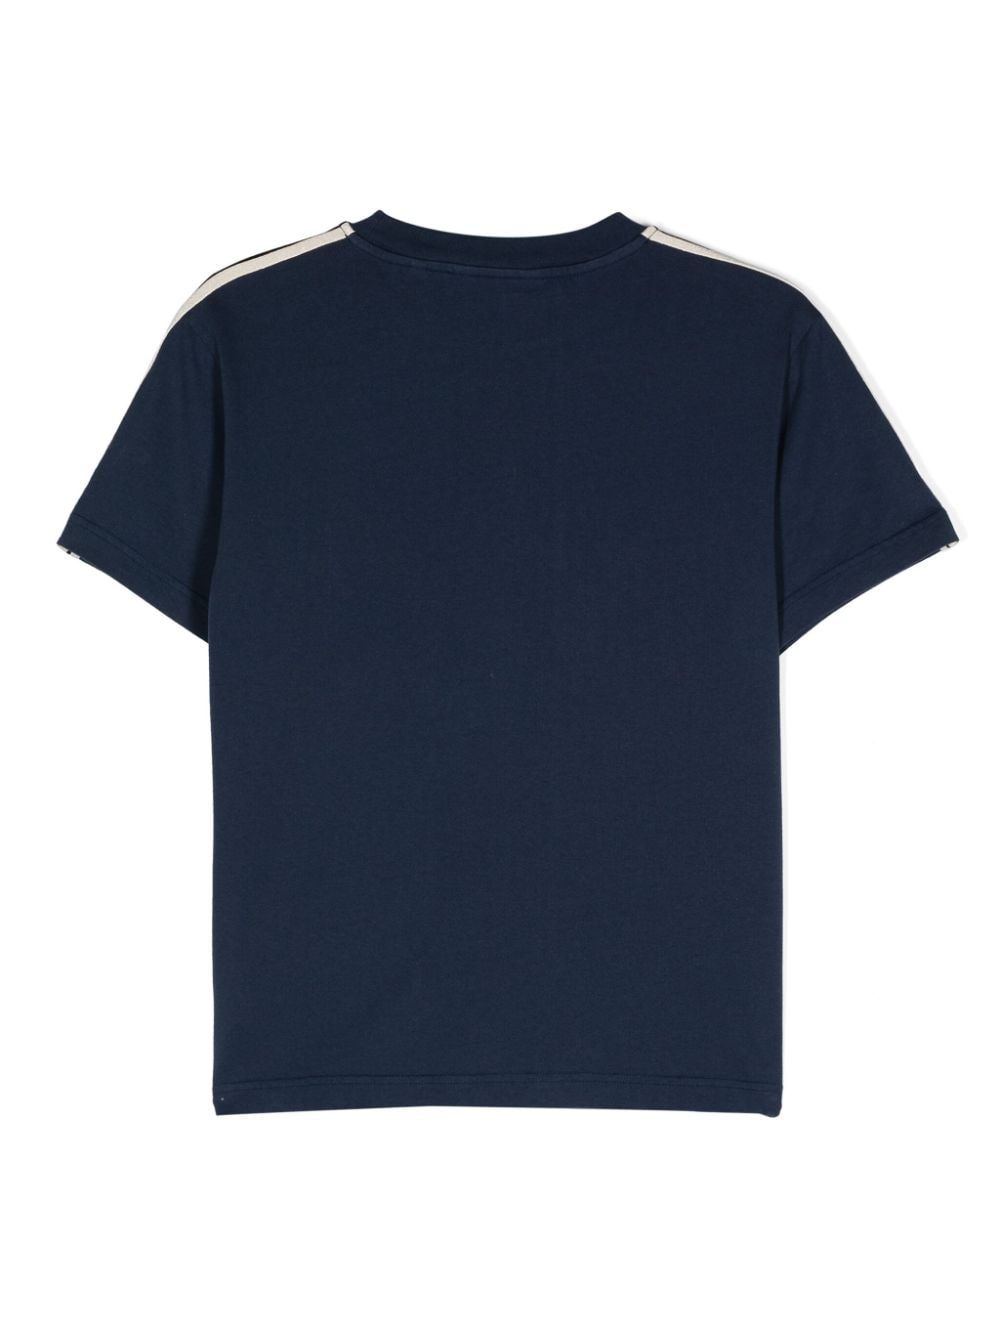 Midnight blue cotton t-shirt for boys